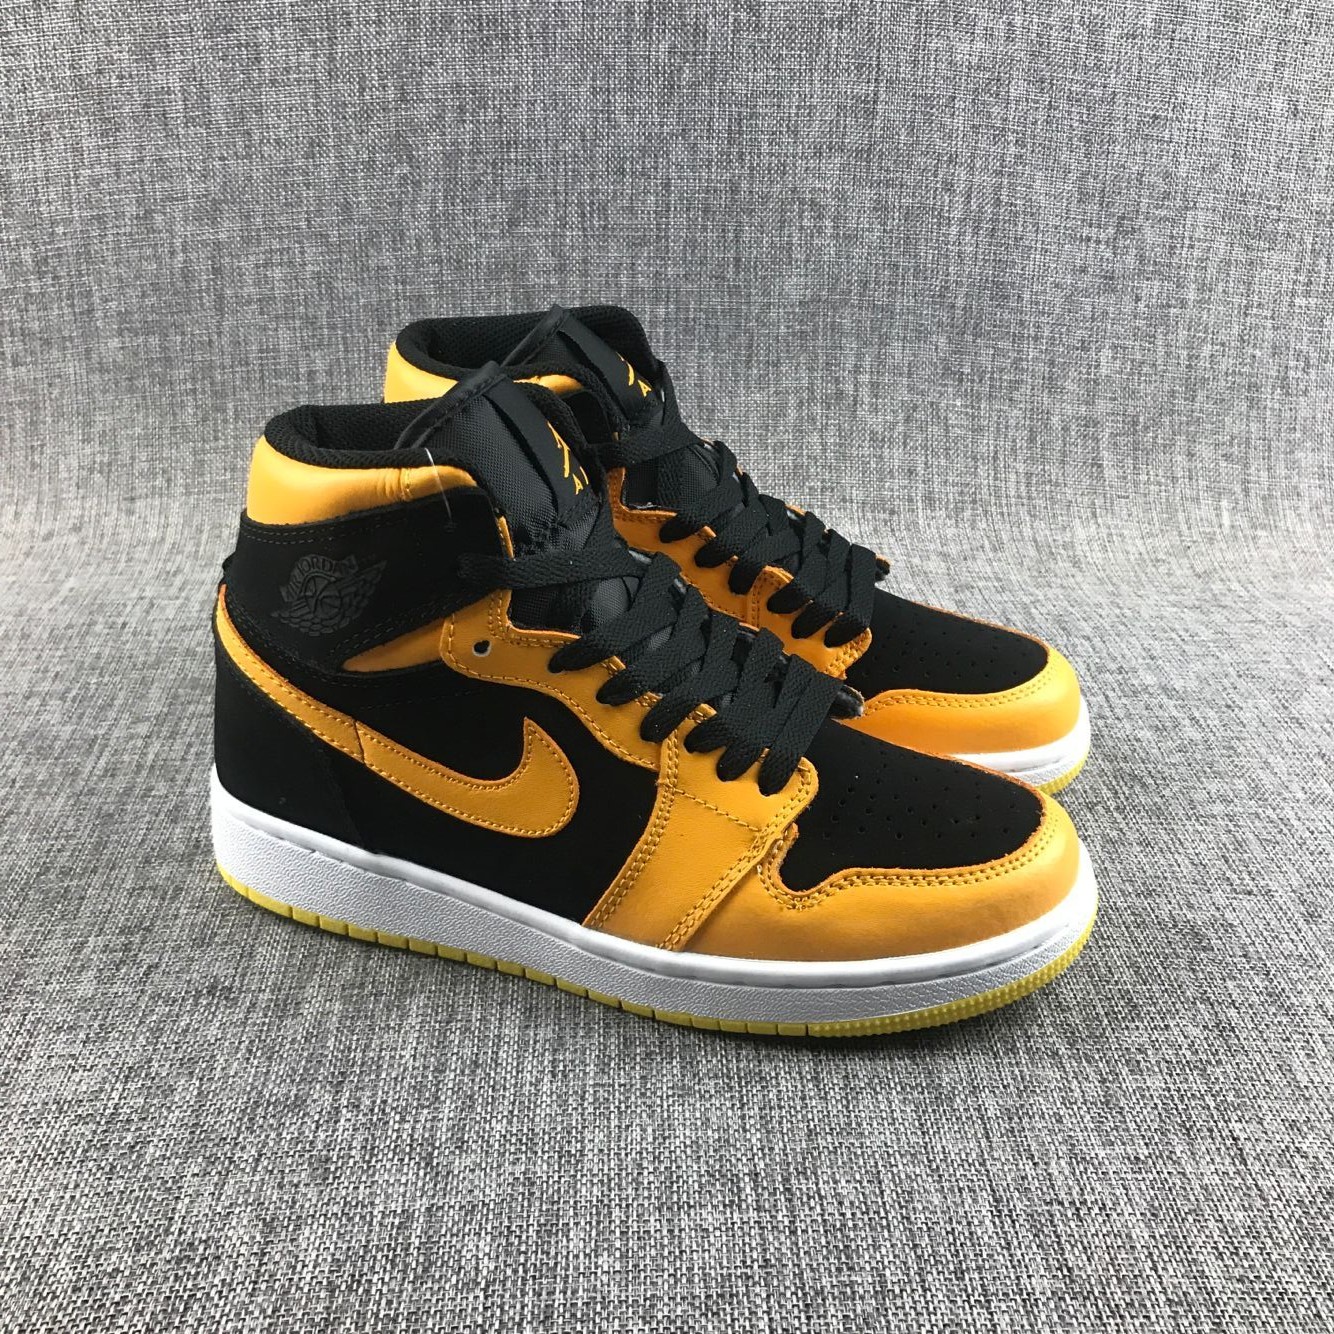 2018 Air Jordan 1 High Black Yellow Shoes